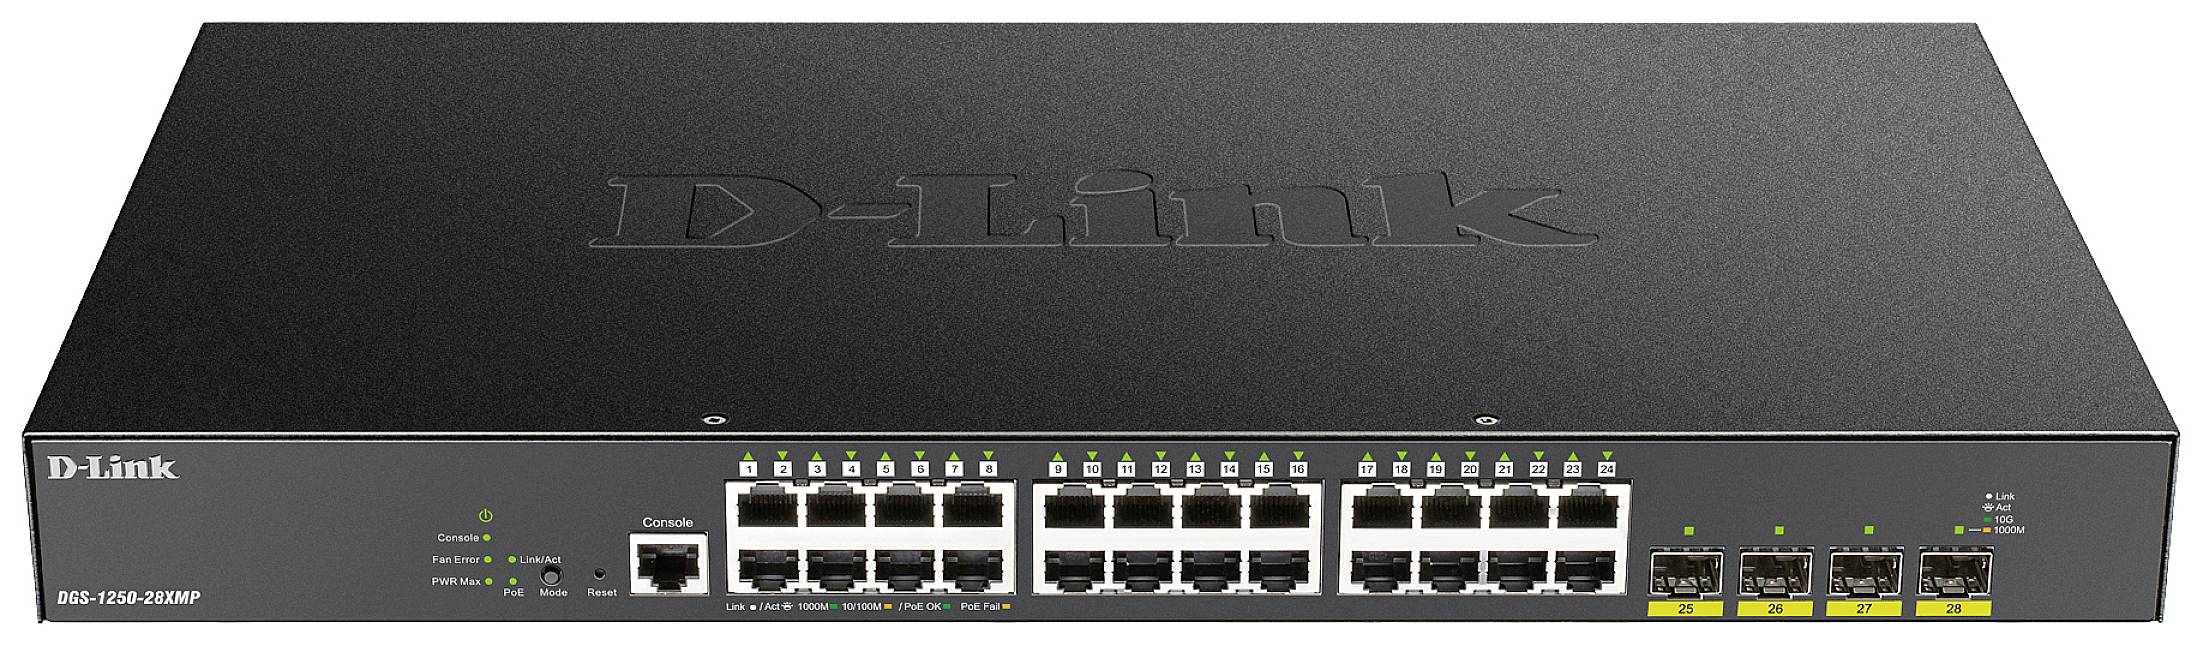 D-LINK Switch / 28-Port Smart Managed Gigabit Stack Switch, dlink green 3.0, 24x 10/100/1000Mbit/s T